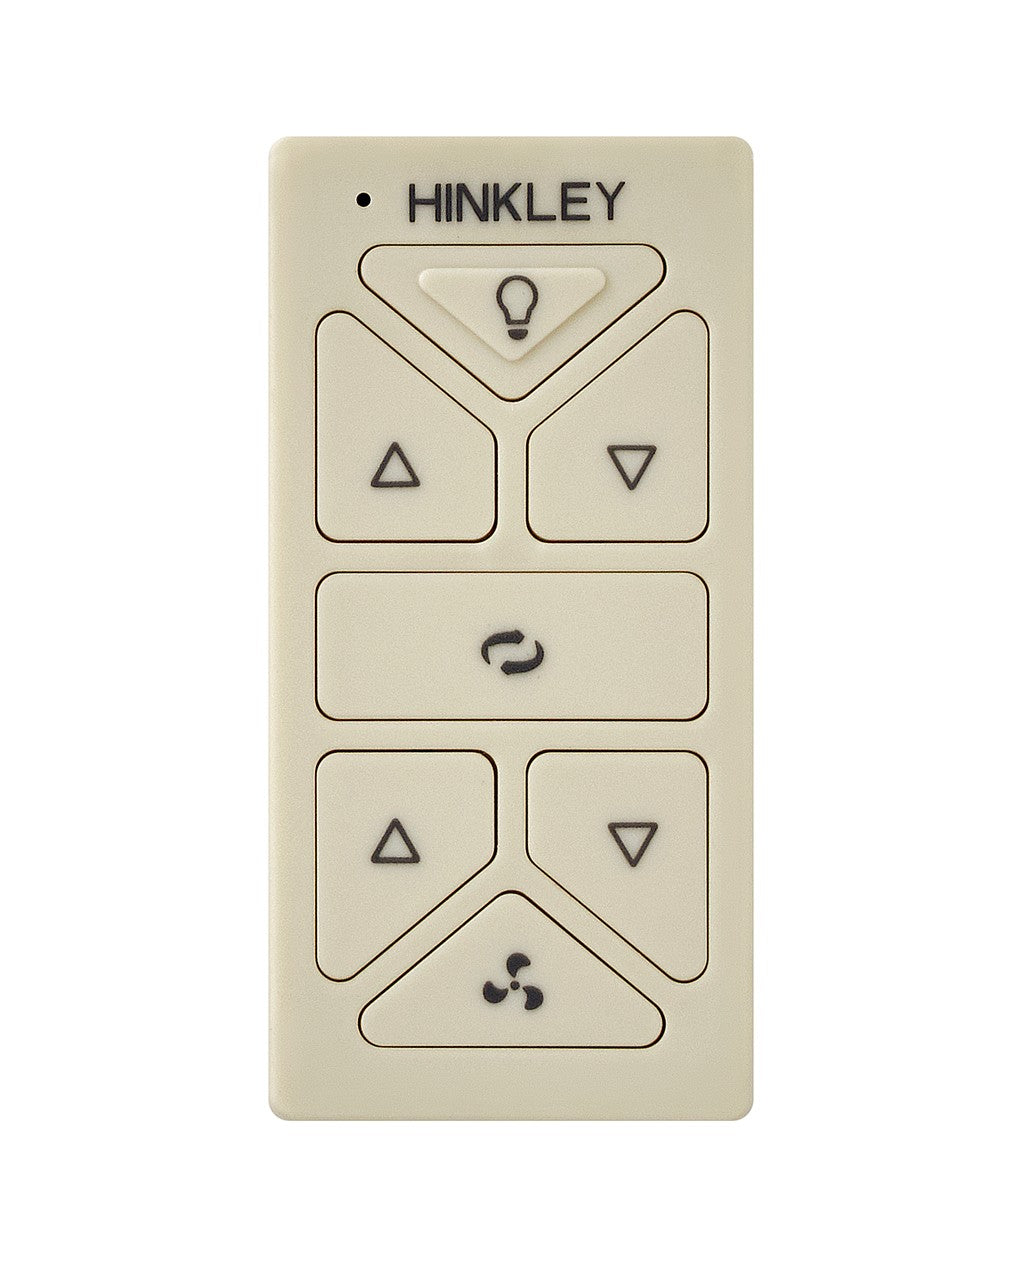 Hinkley - 980014FLA-R - Fan Control - Hiro Control Reversing - Light Almond